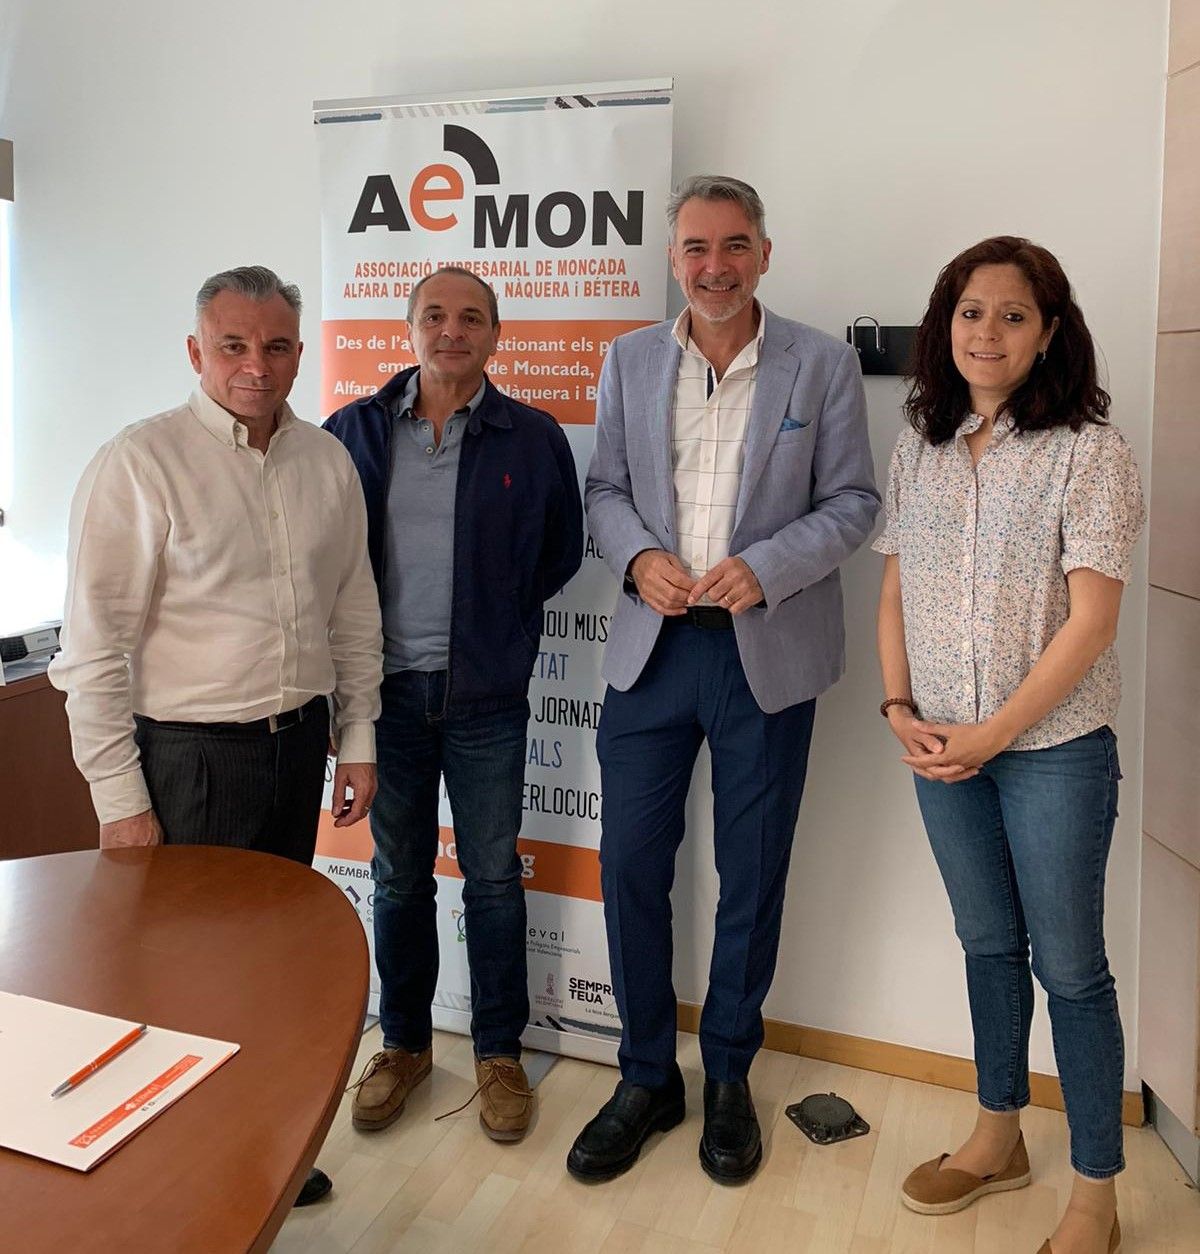 AEMON Asociación Empresarial se reúne con los partidos políticos de Nàquera